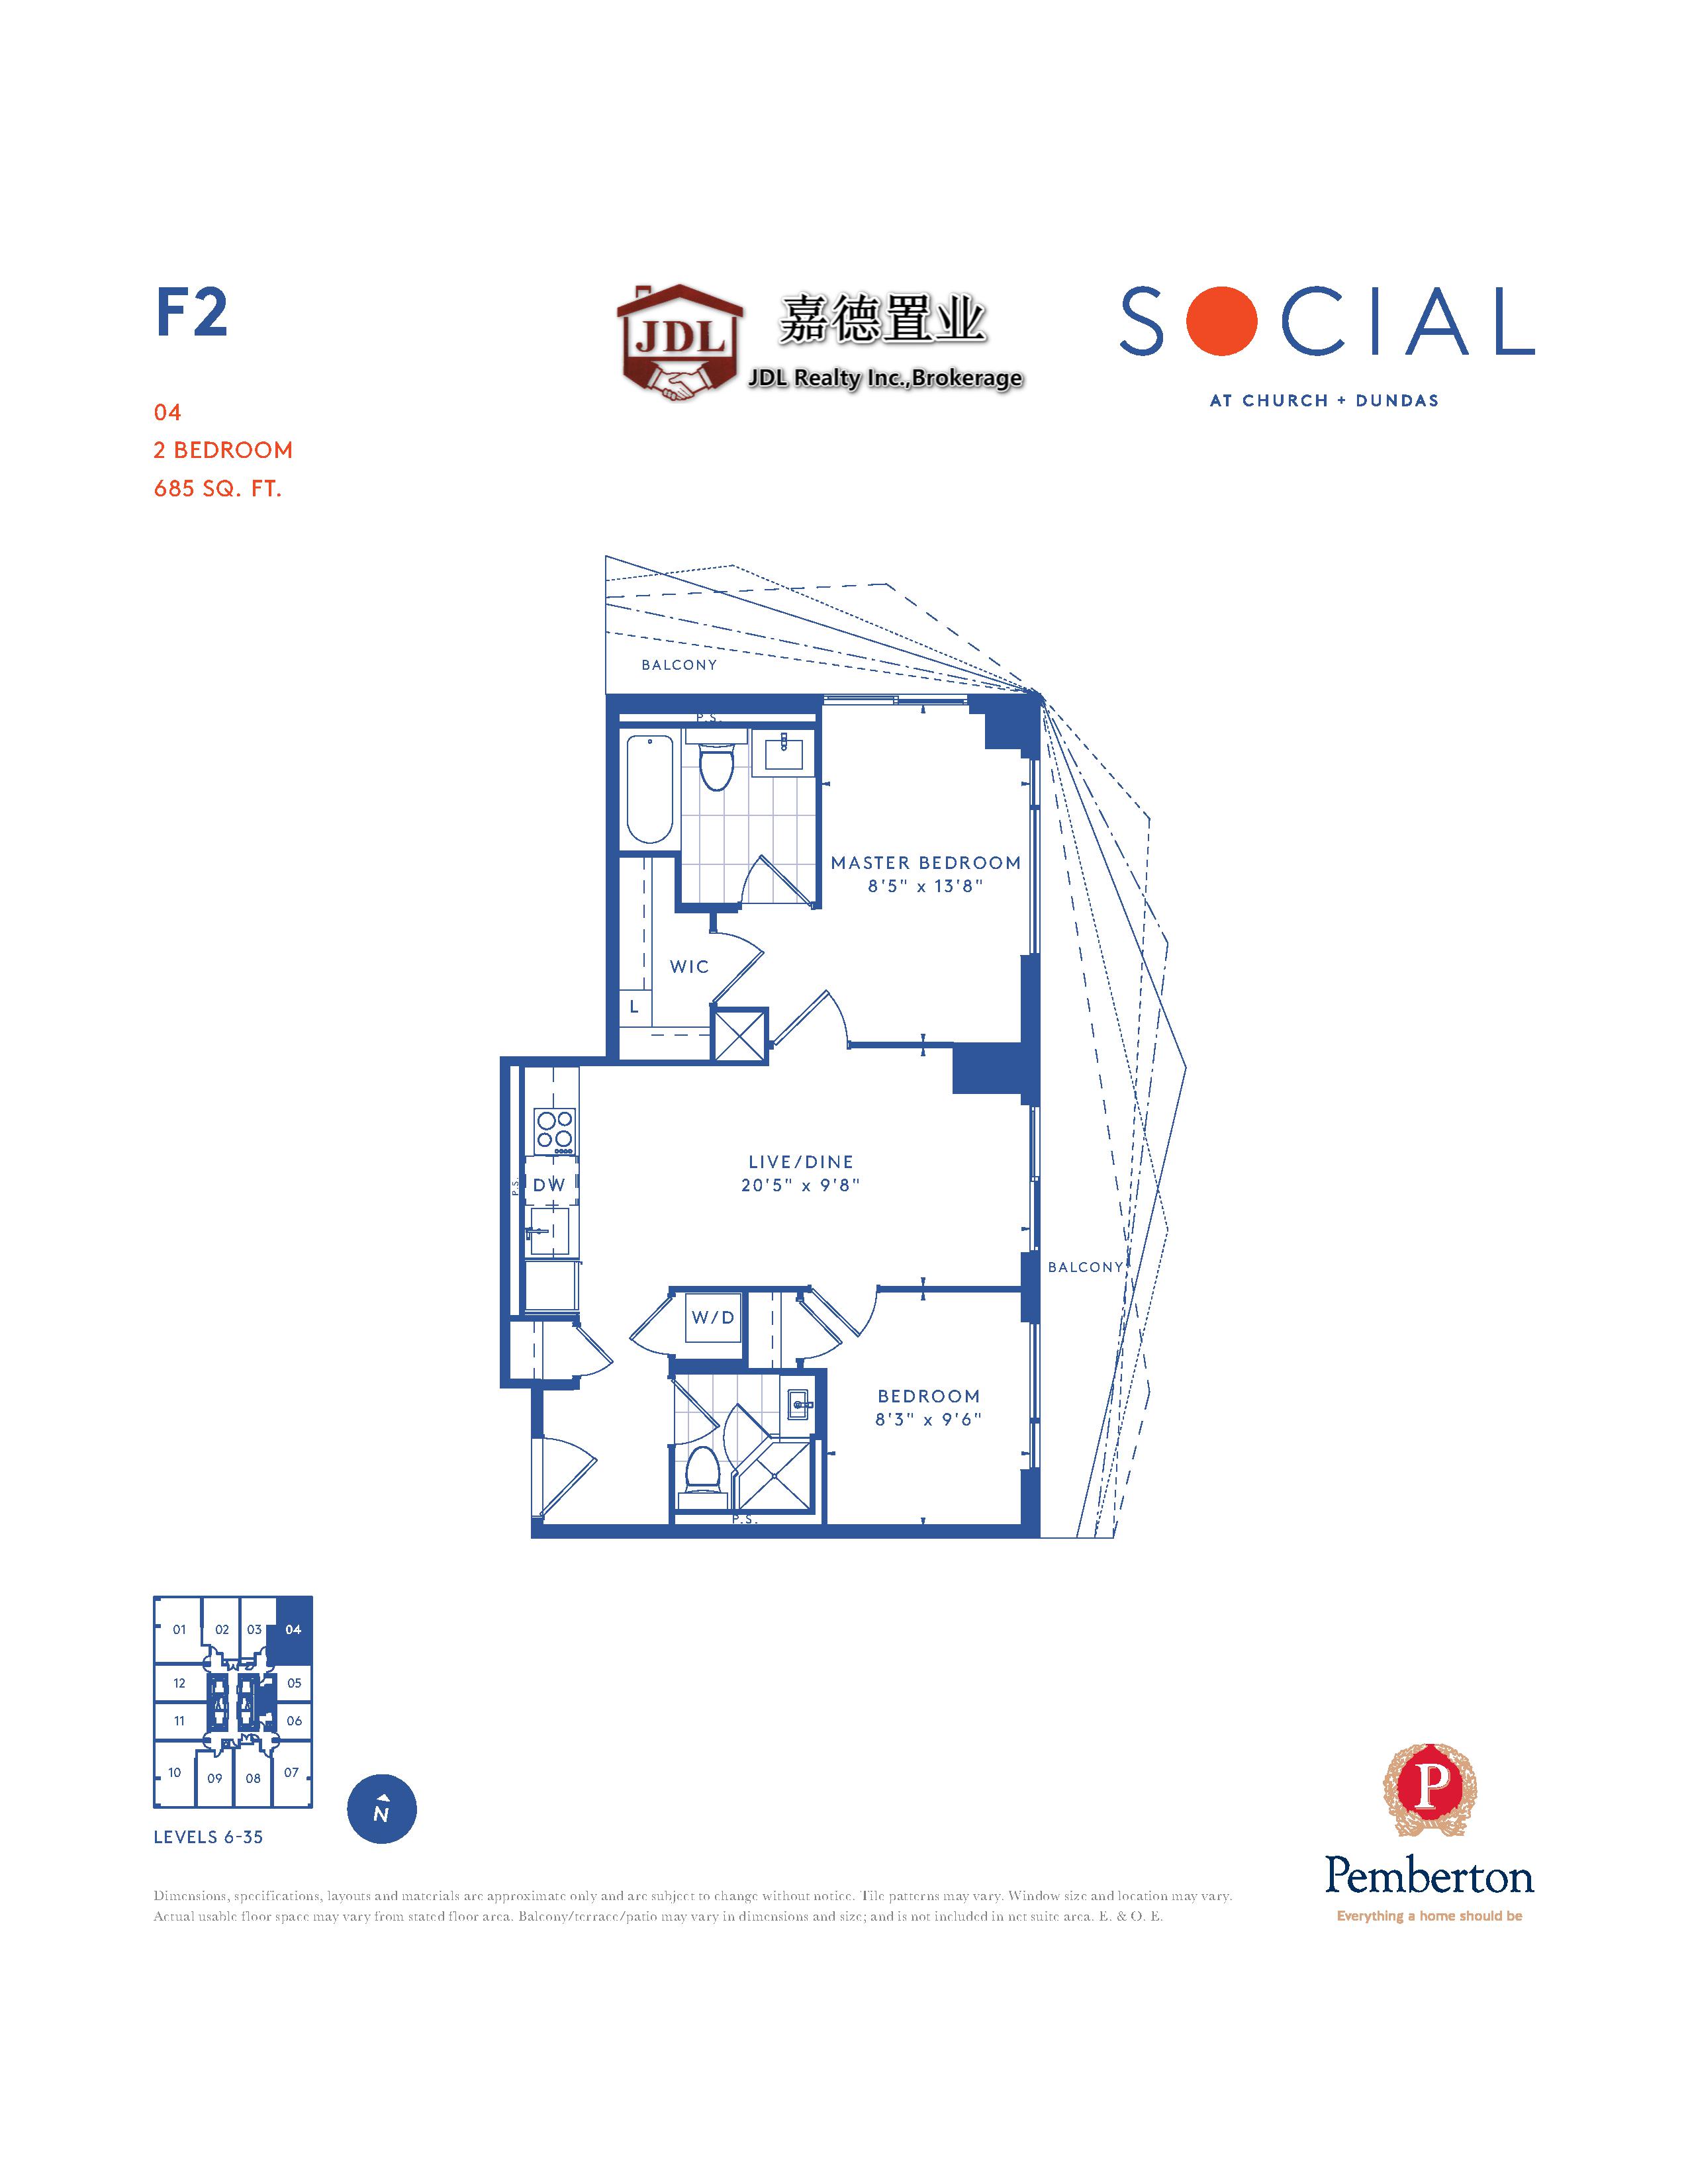 Social Tower floor plan 1 6